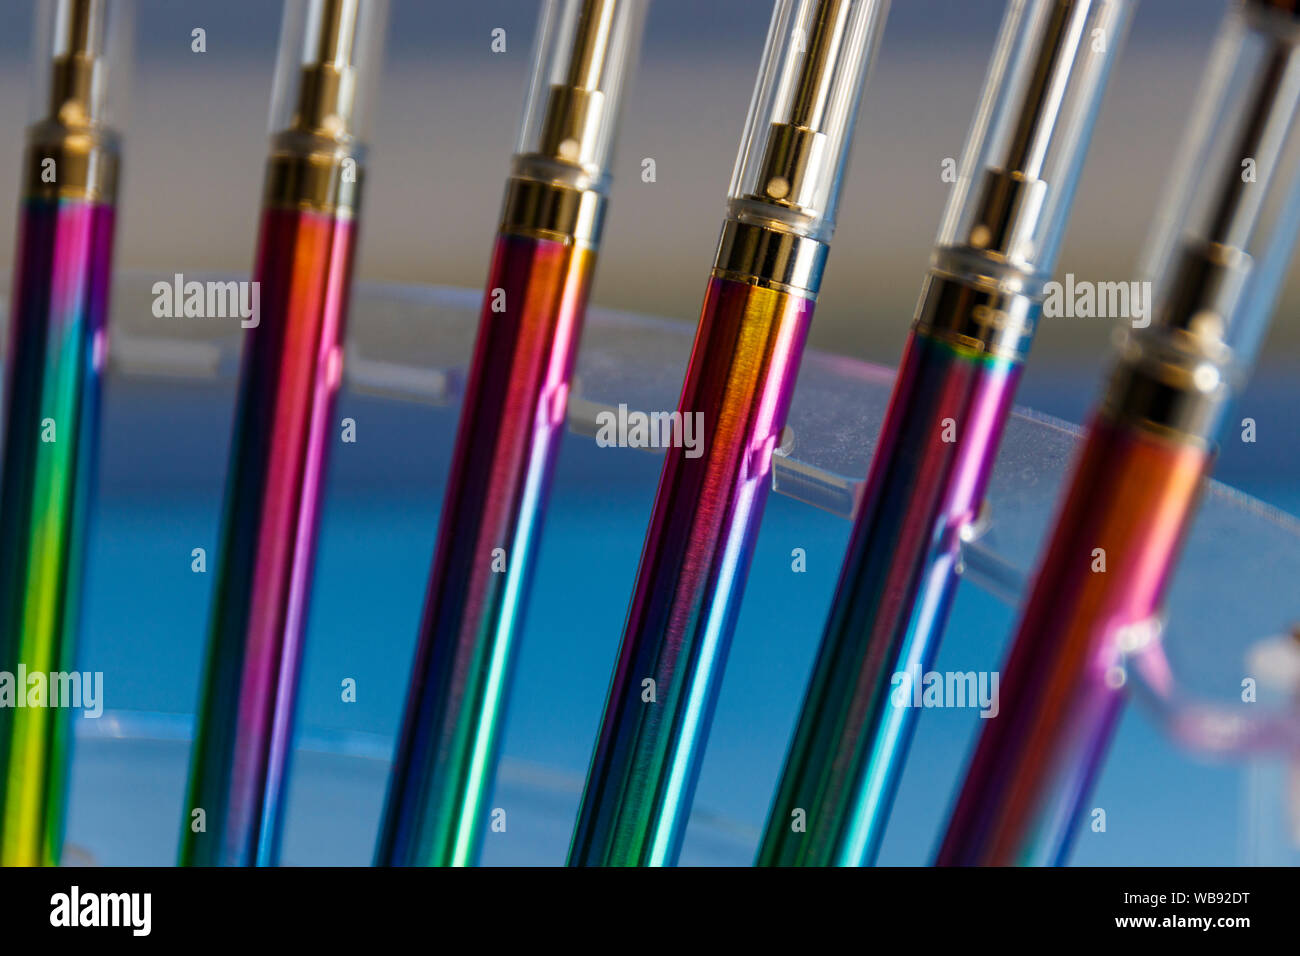 Vape or vaporizer pens. Vape pens come refillable cartridges that can be filled with THC oil, cannabis oil, hash oil, CBD oil, or vape juice. Vap Stock Photo - Alamy